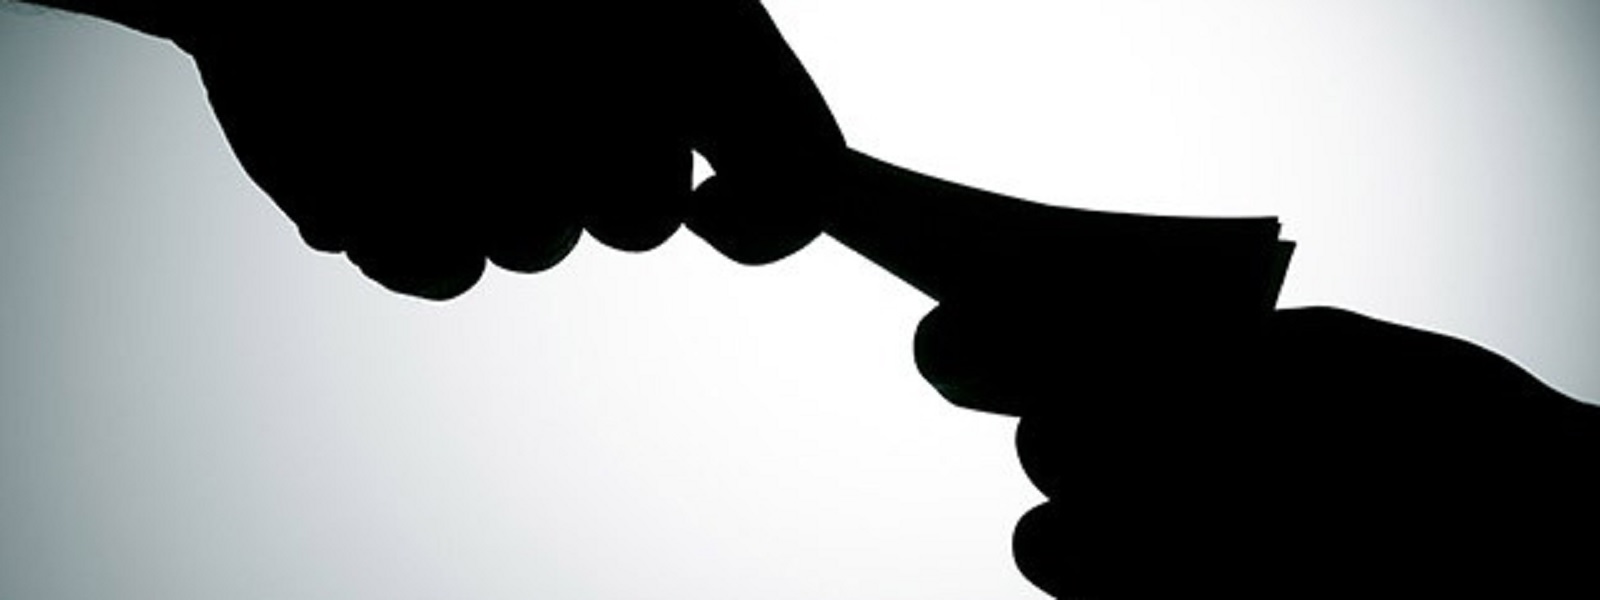 Bribery & Corruption: The Solution